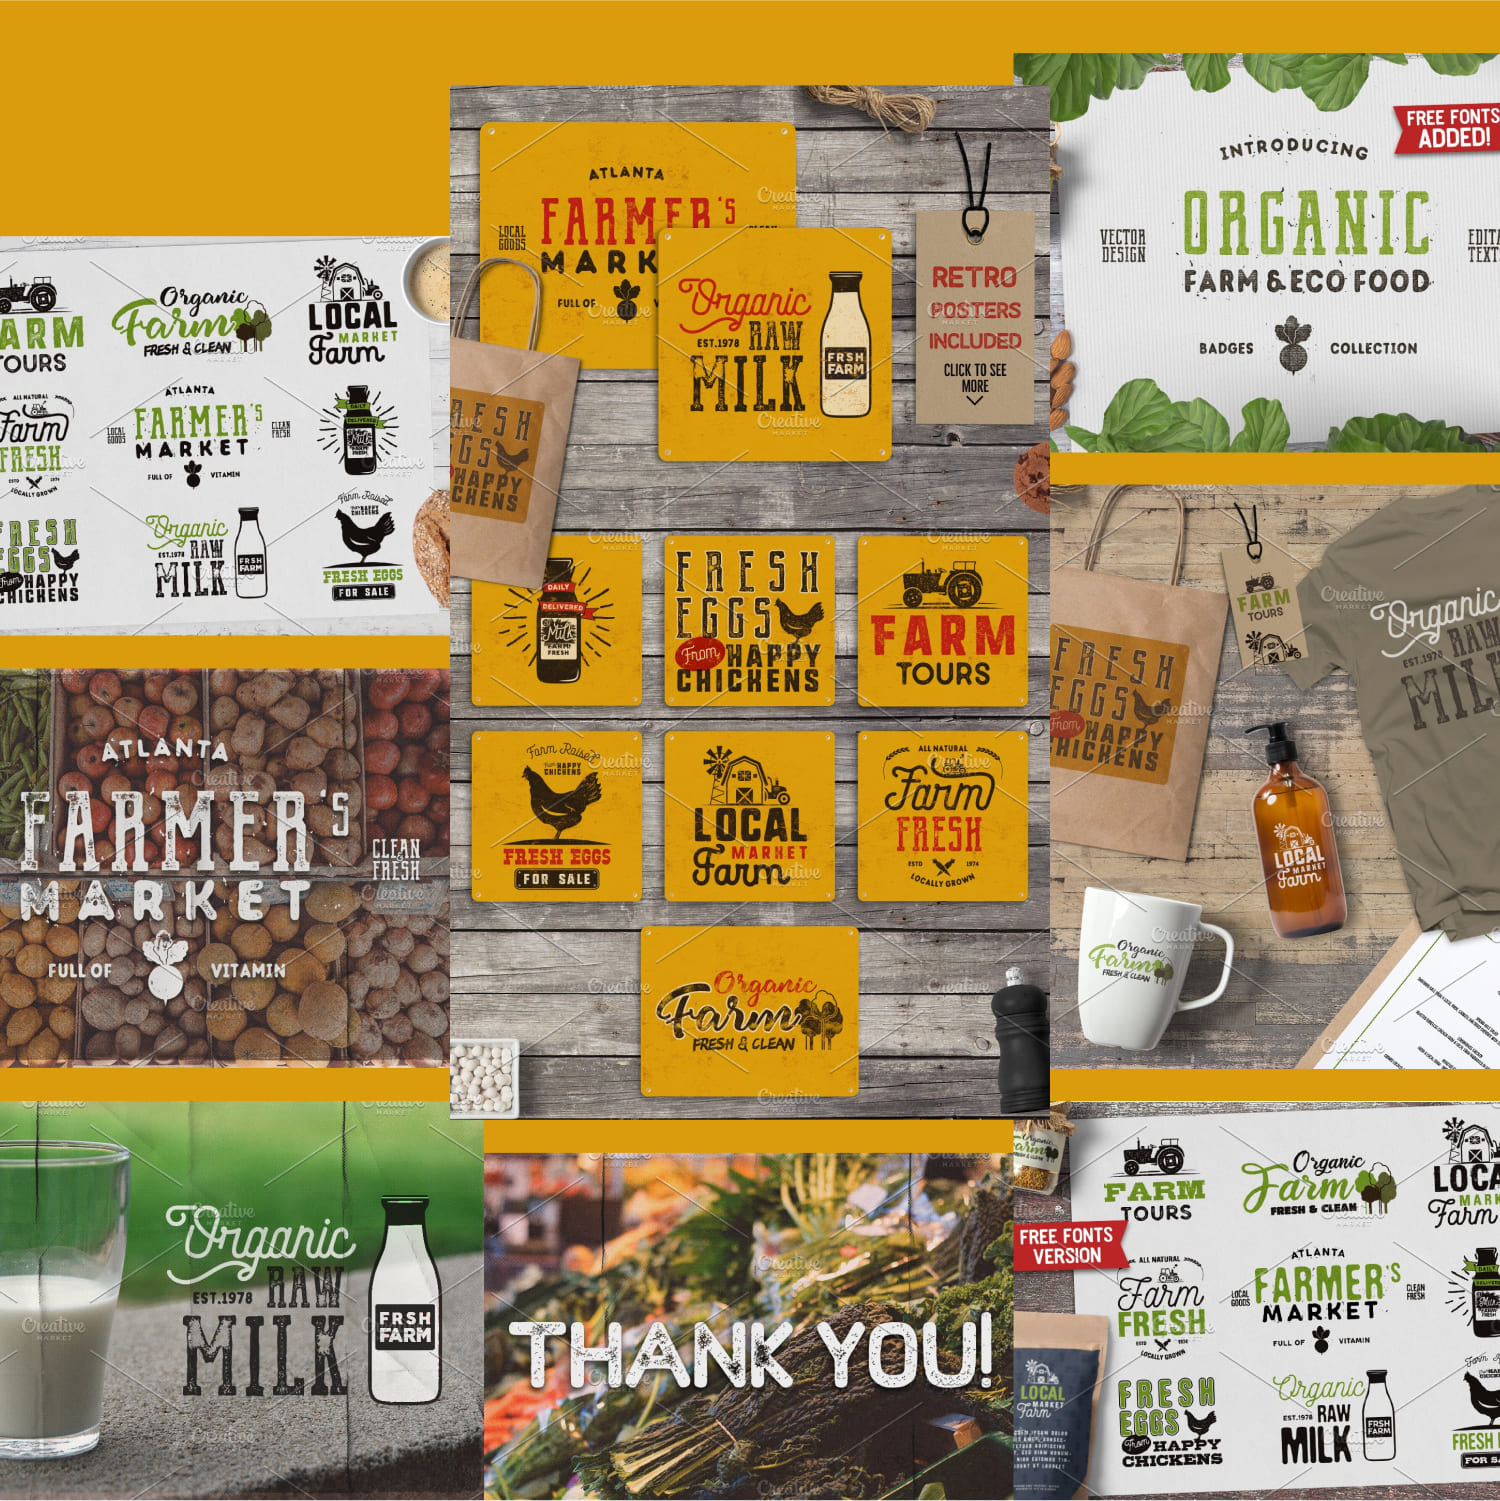 Organic Farm & Eco Food Logos Badges JeksonGraphics cover.